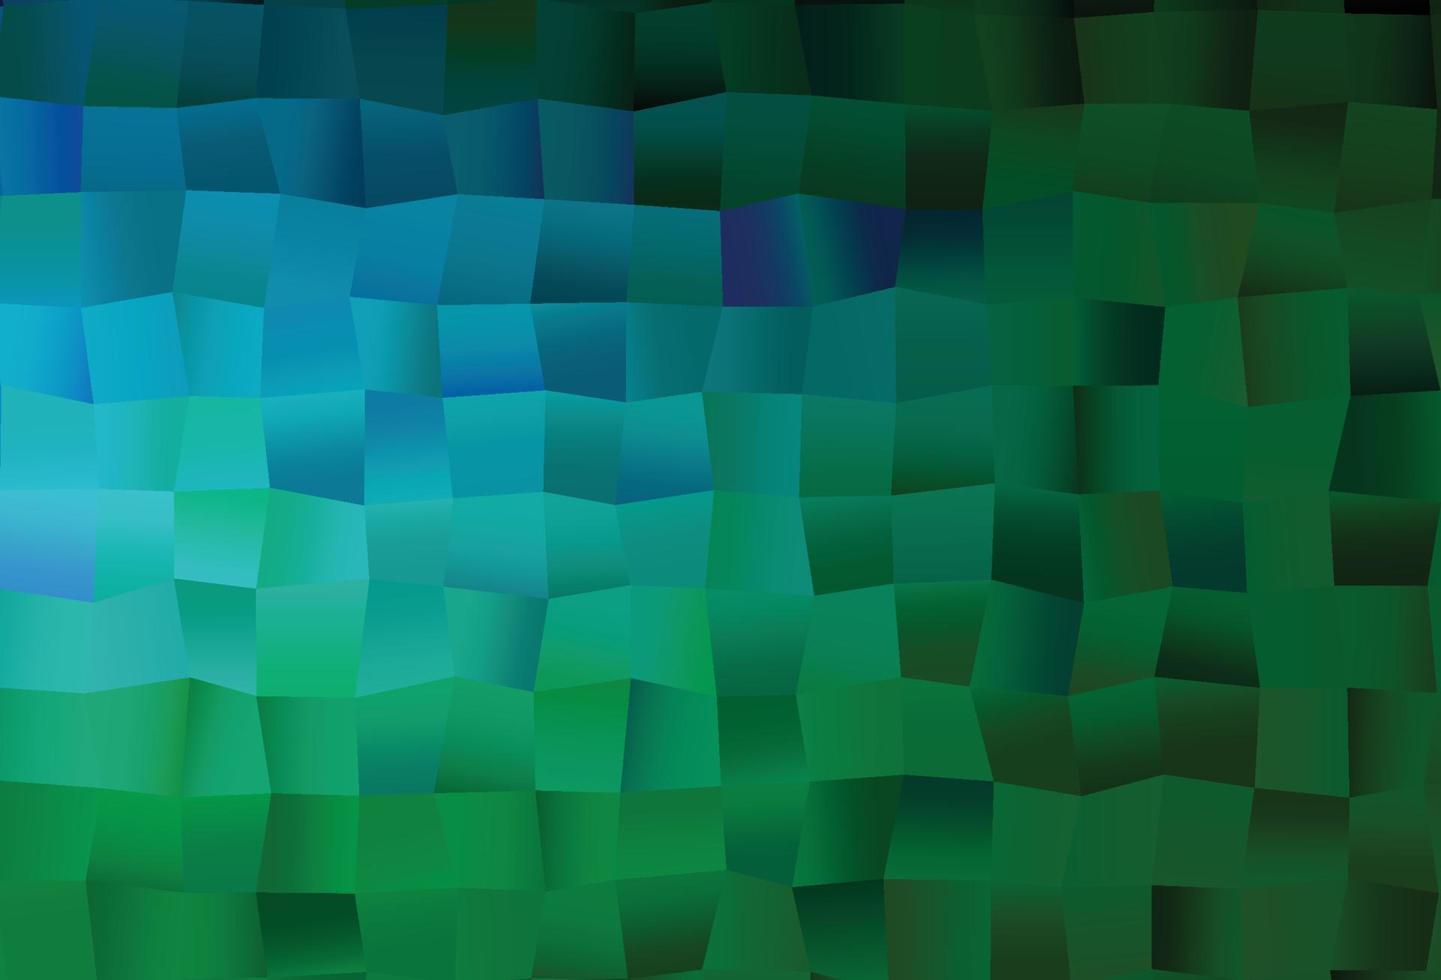 capa de vetor azul e verde claro com estilo poligonal.